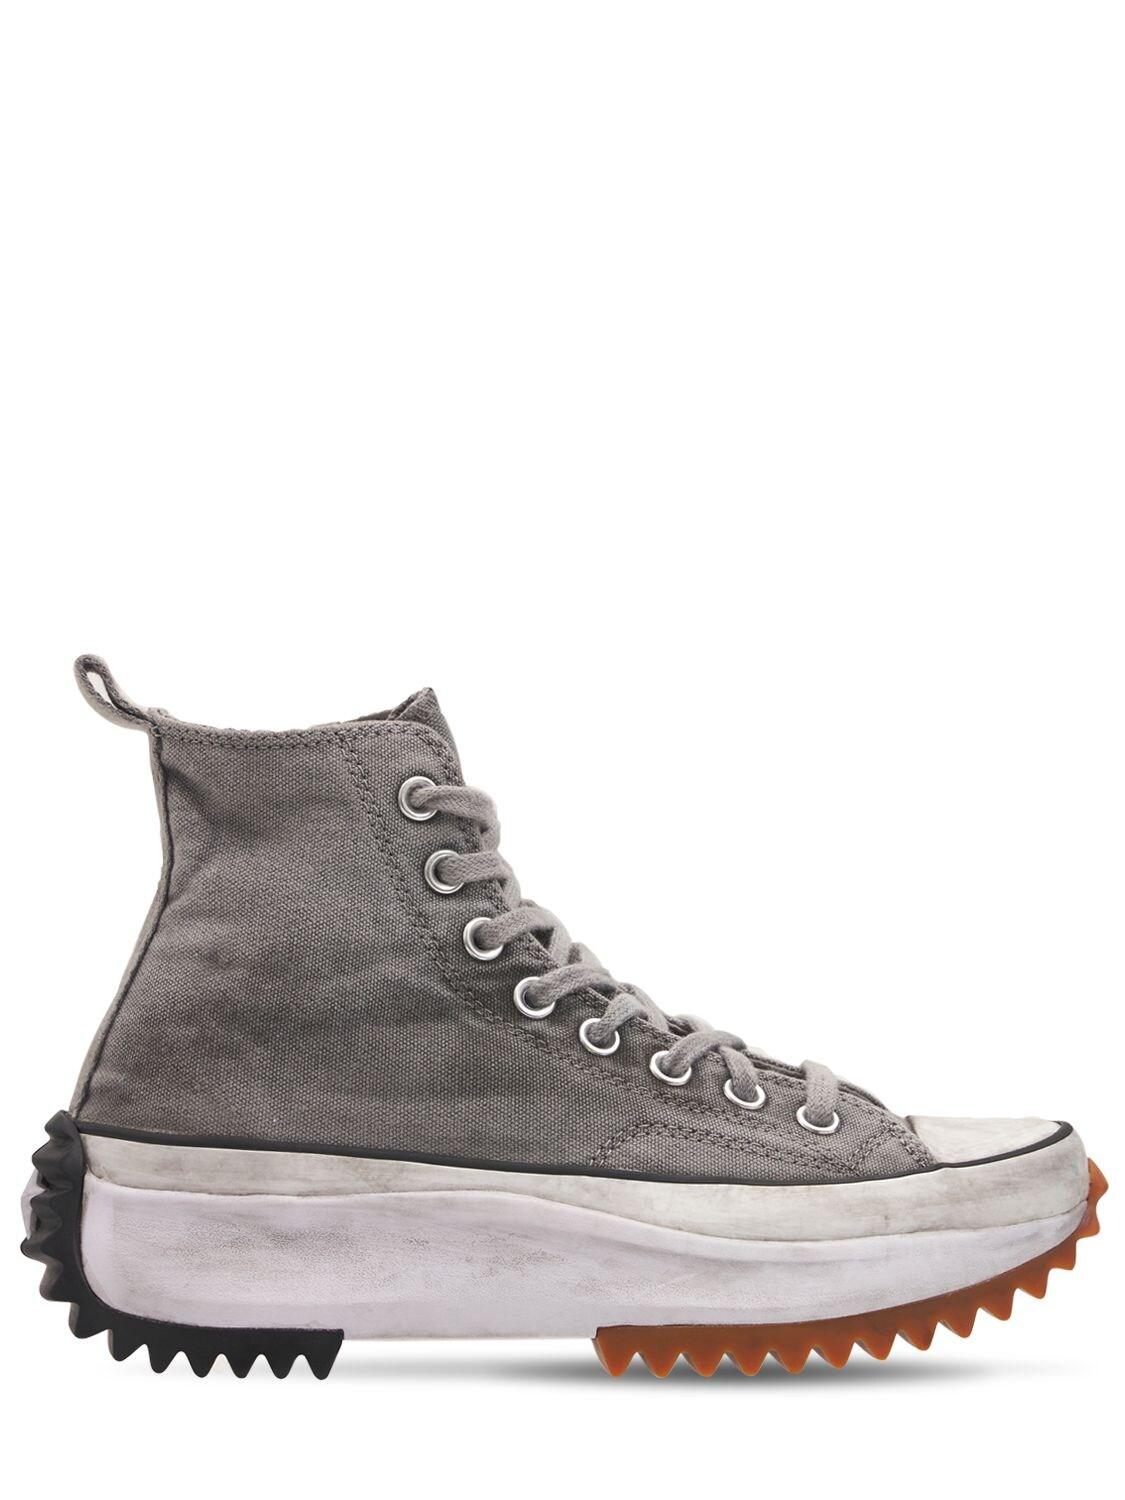 Converse Run Star Hike Ltd Sneakers in Gray | Lyst